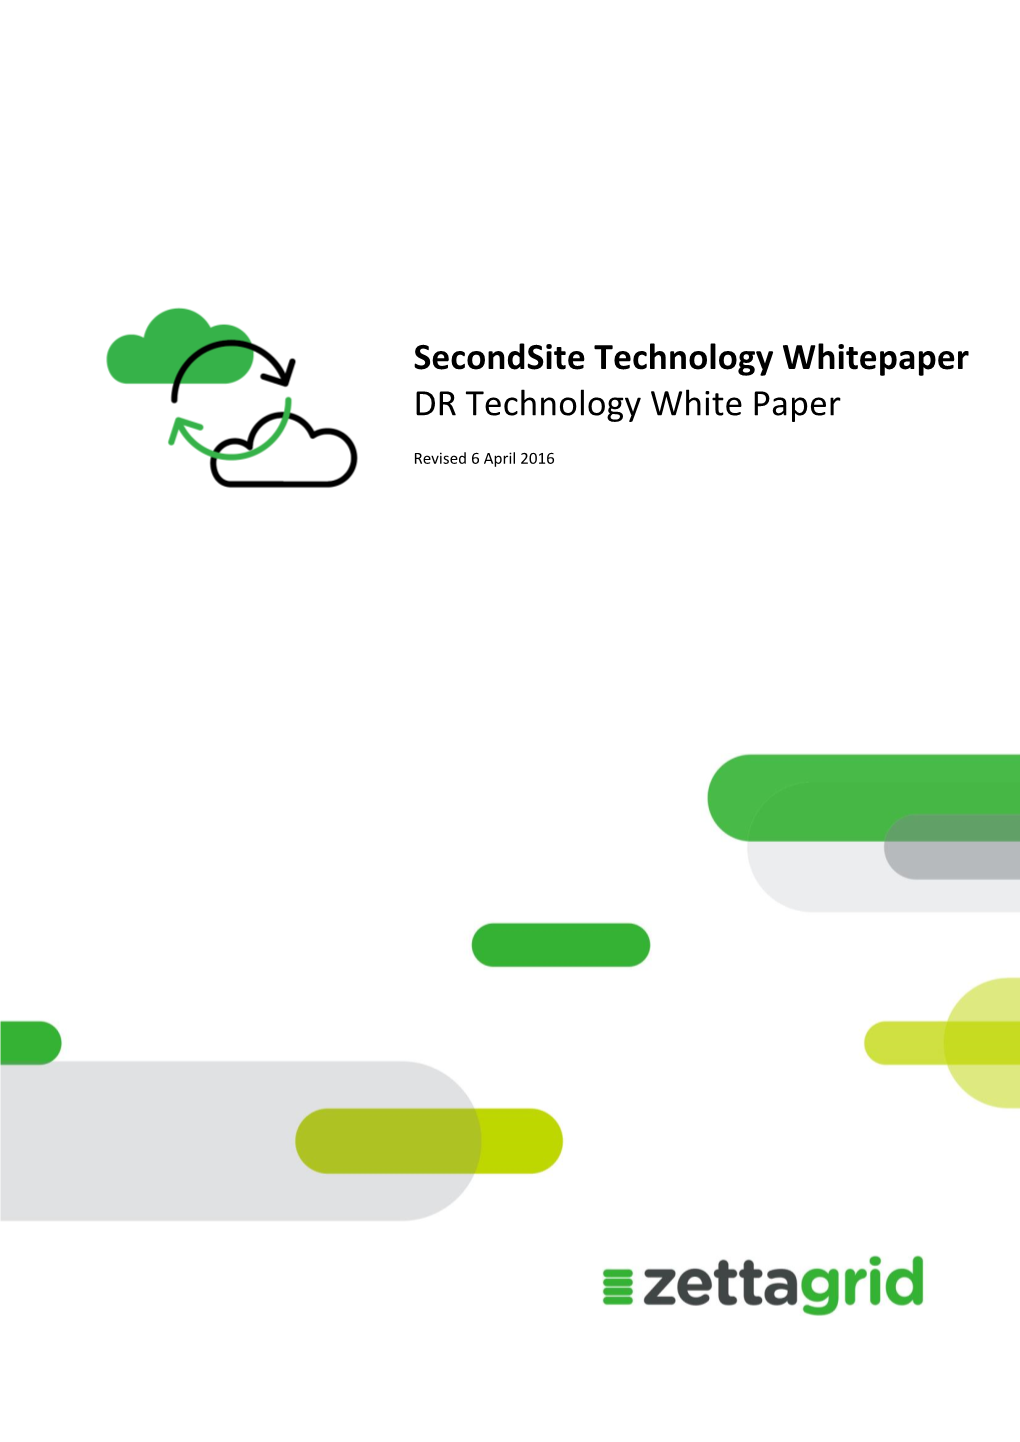 Secondsite Technology Whitepaper DR Technology White Paper